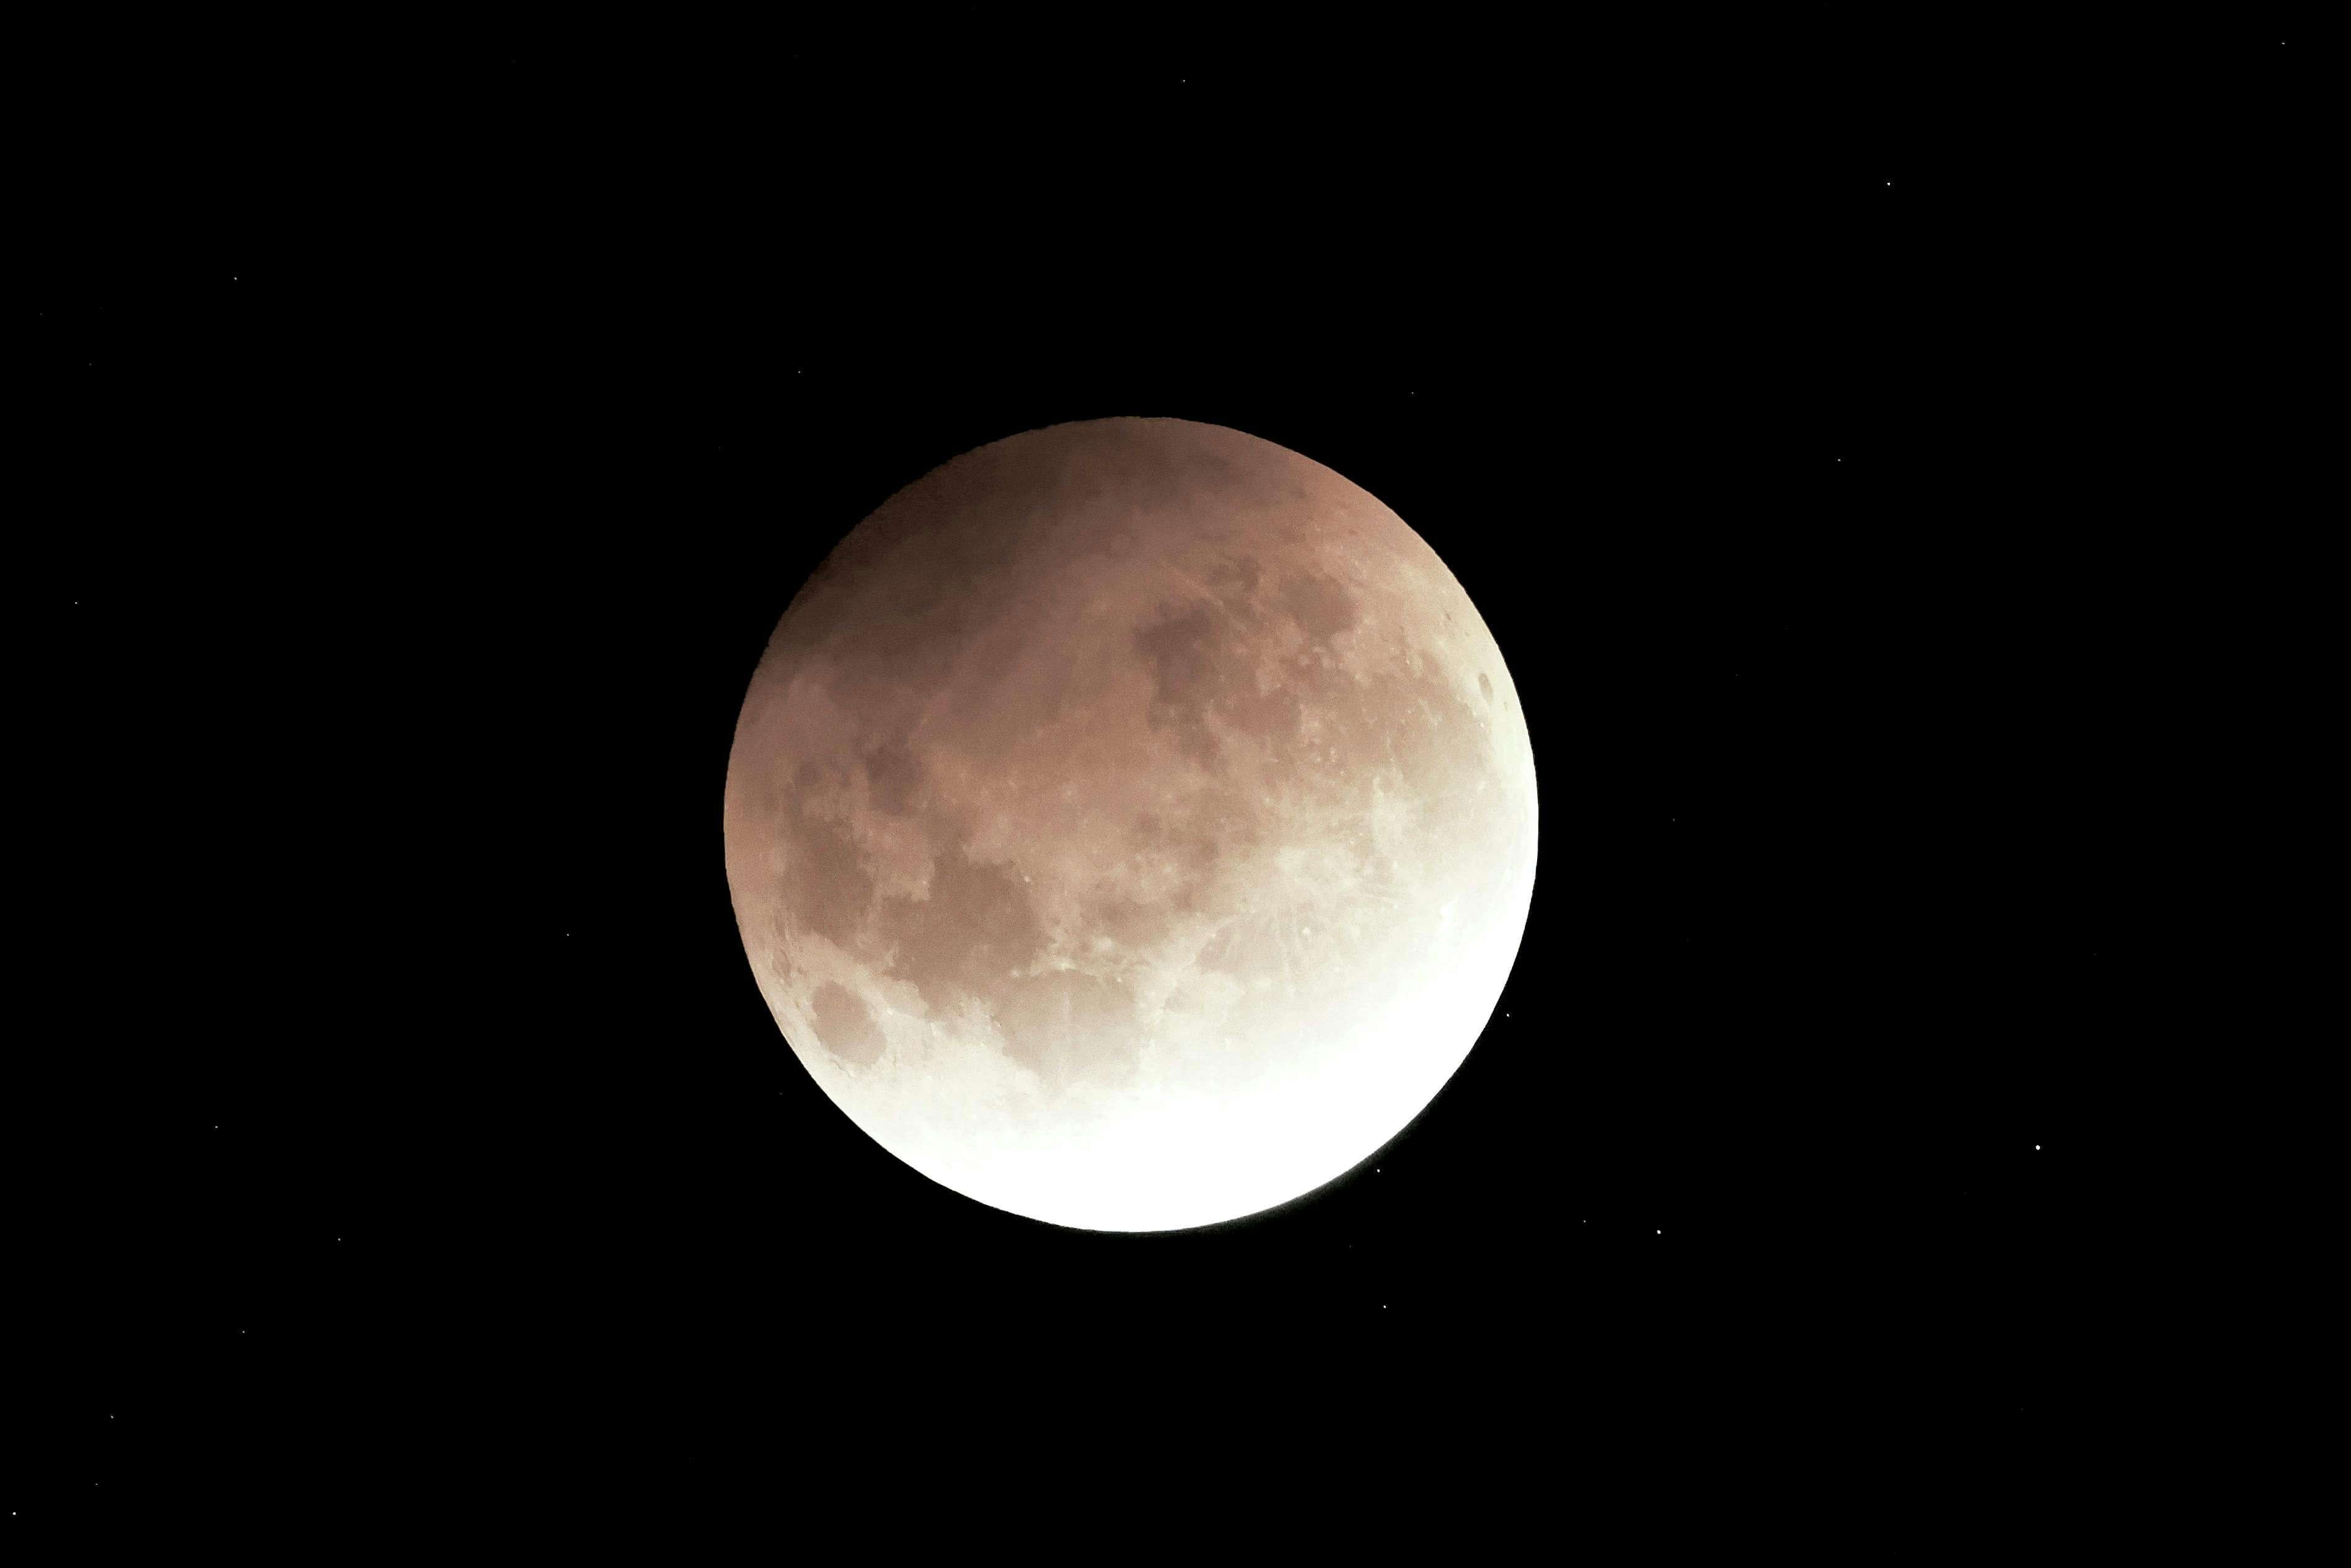 bestof topix auckland nature night outdoors astronomy moon eclipse lunar eclipse